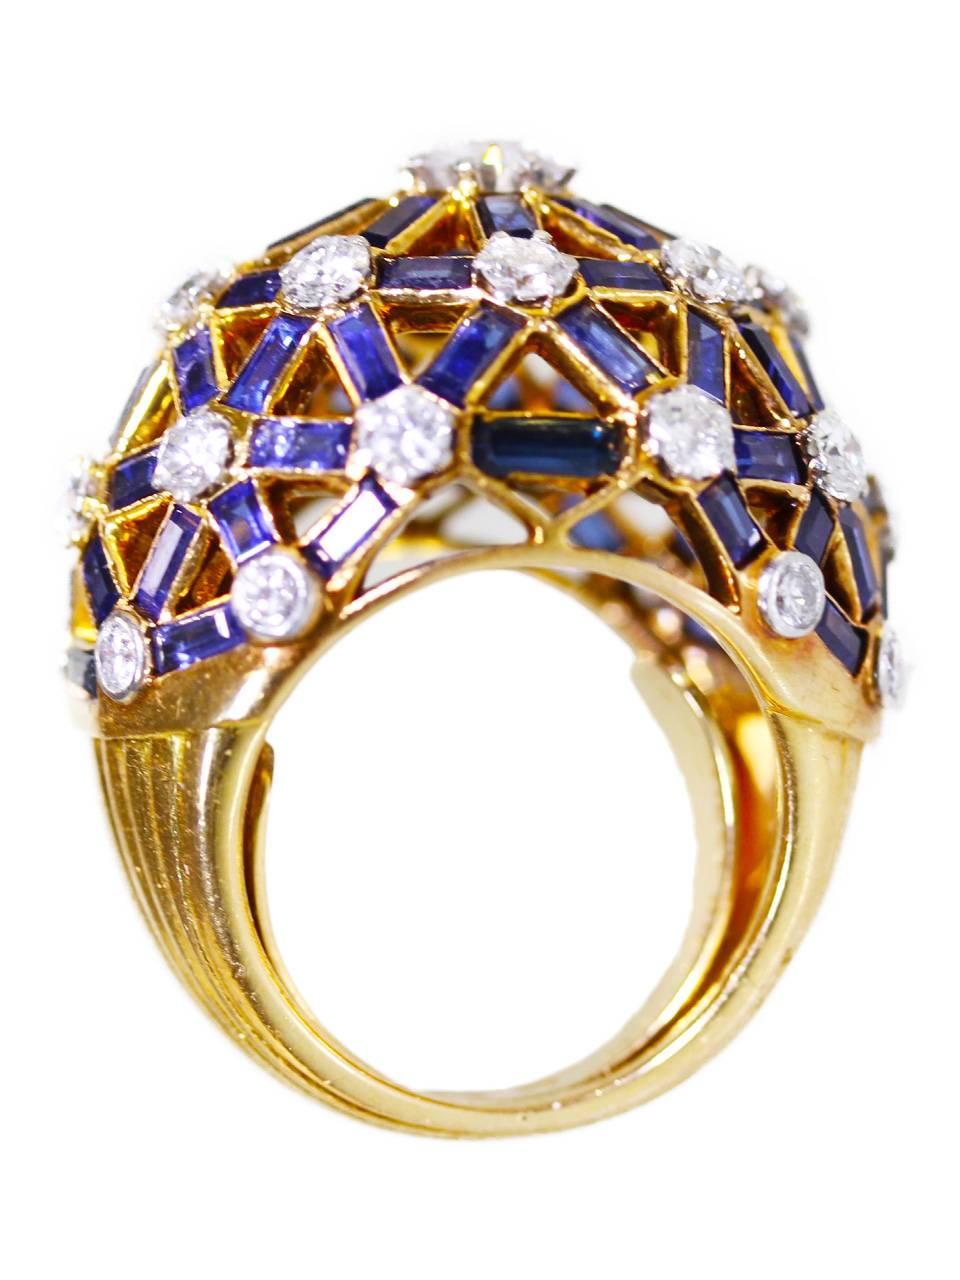 Women's 1960s Mellerio Paris Sapphire and Diamond Ring